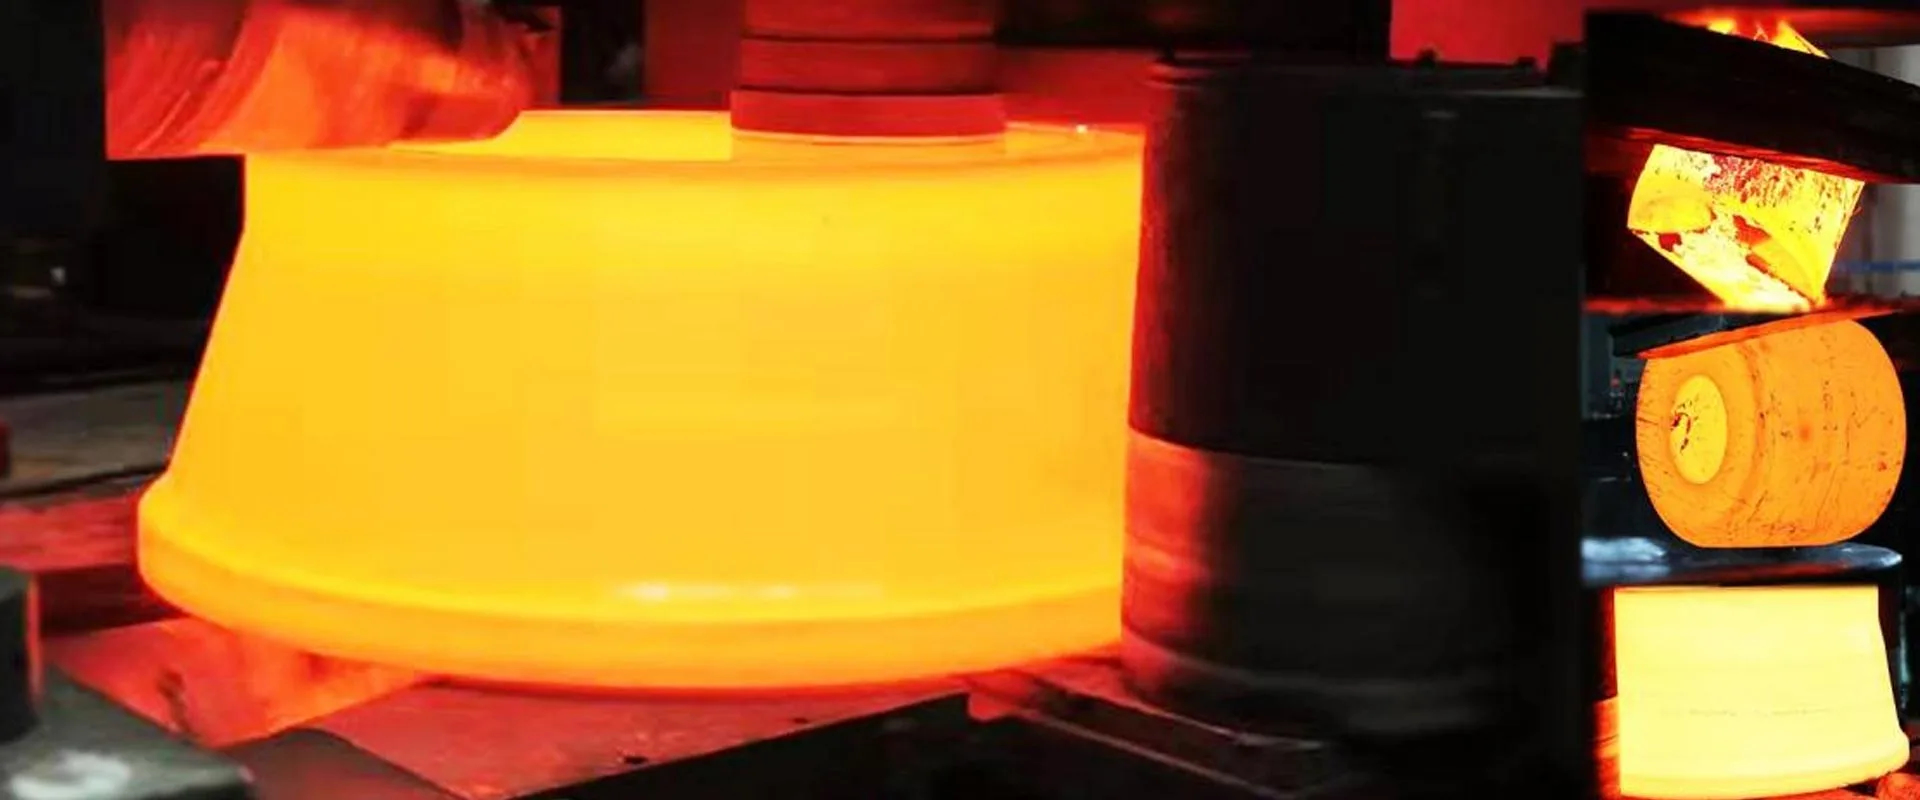 JimaFor Metal Manufacturing Capability